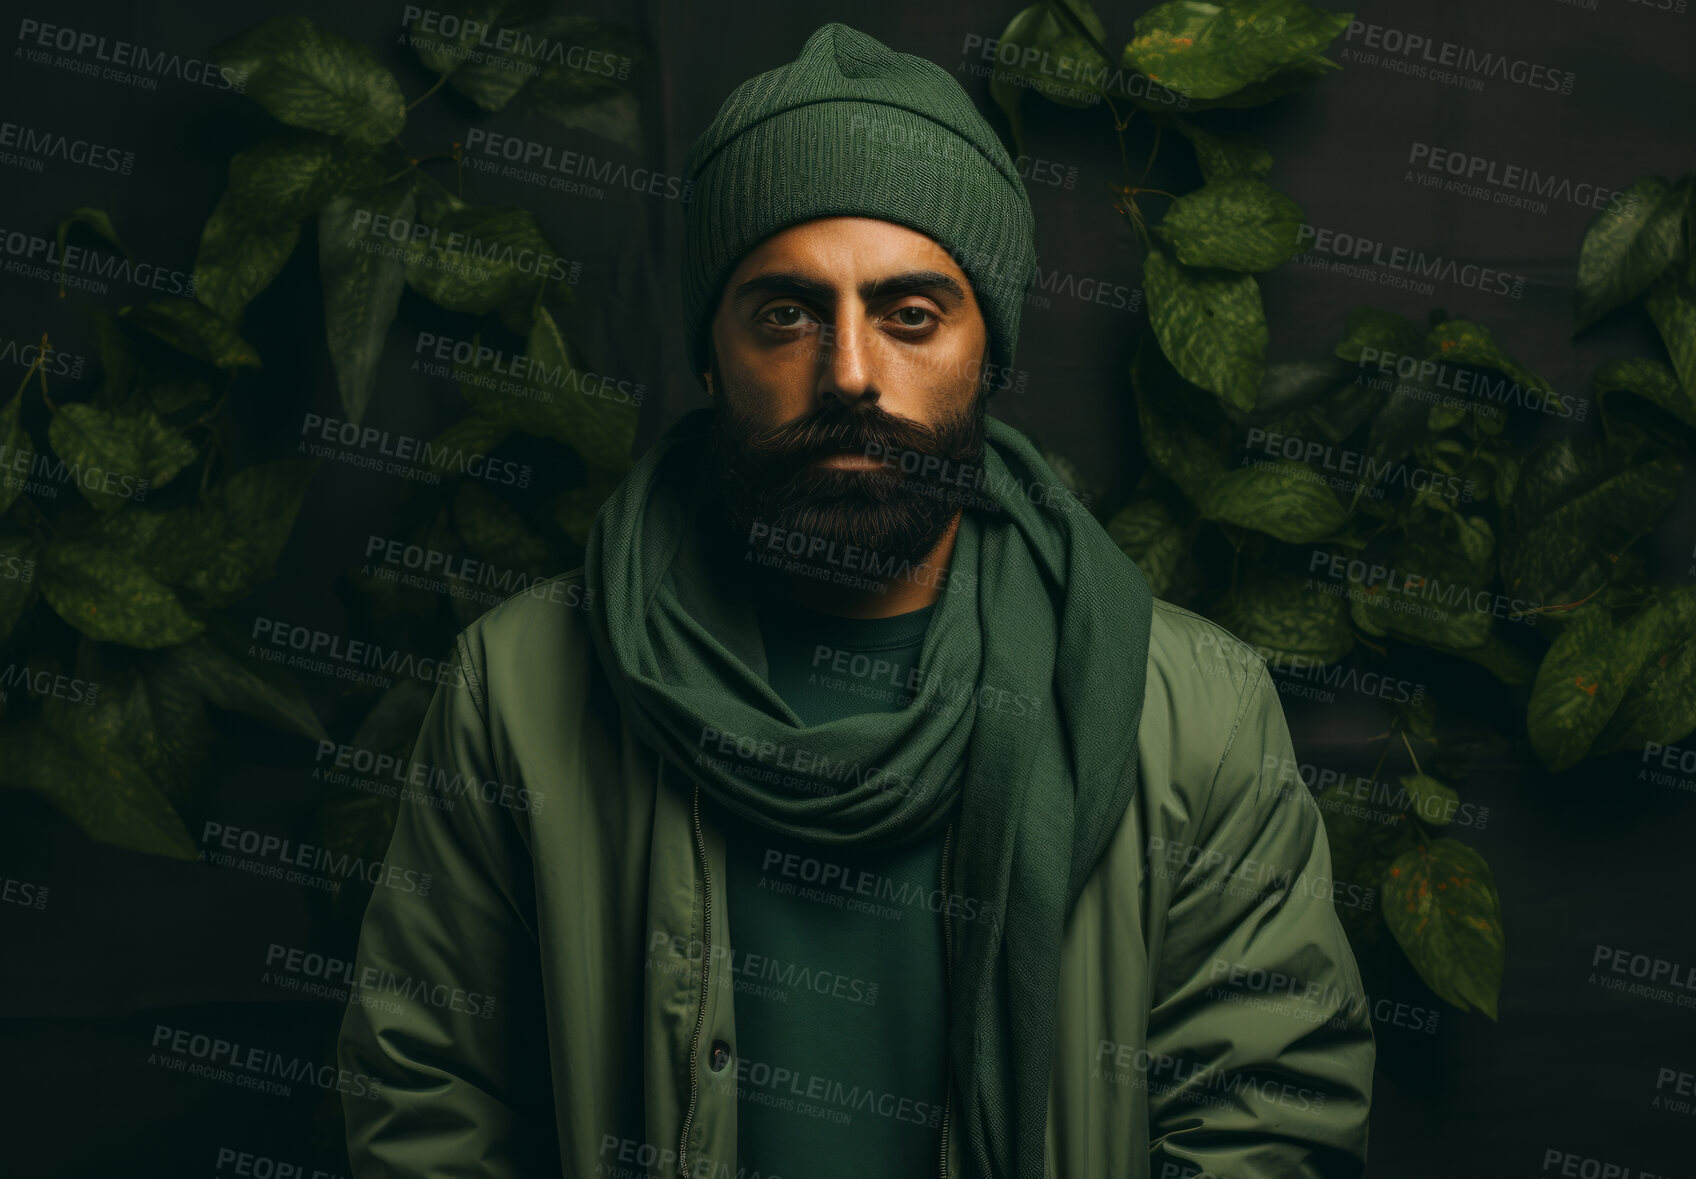 Buy stock photo Sikh Indian man wearing traditional green turban. Studio portrait. Religion concept.